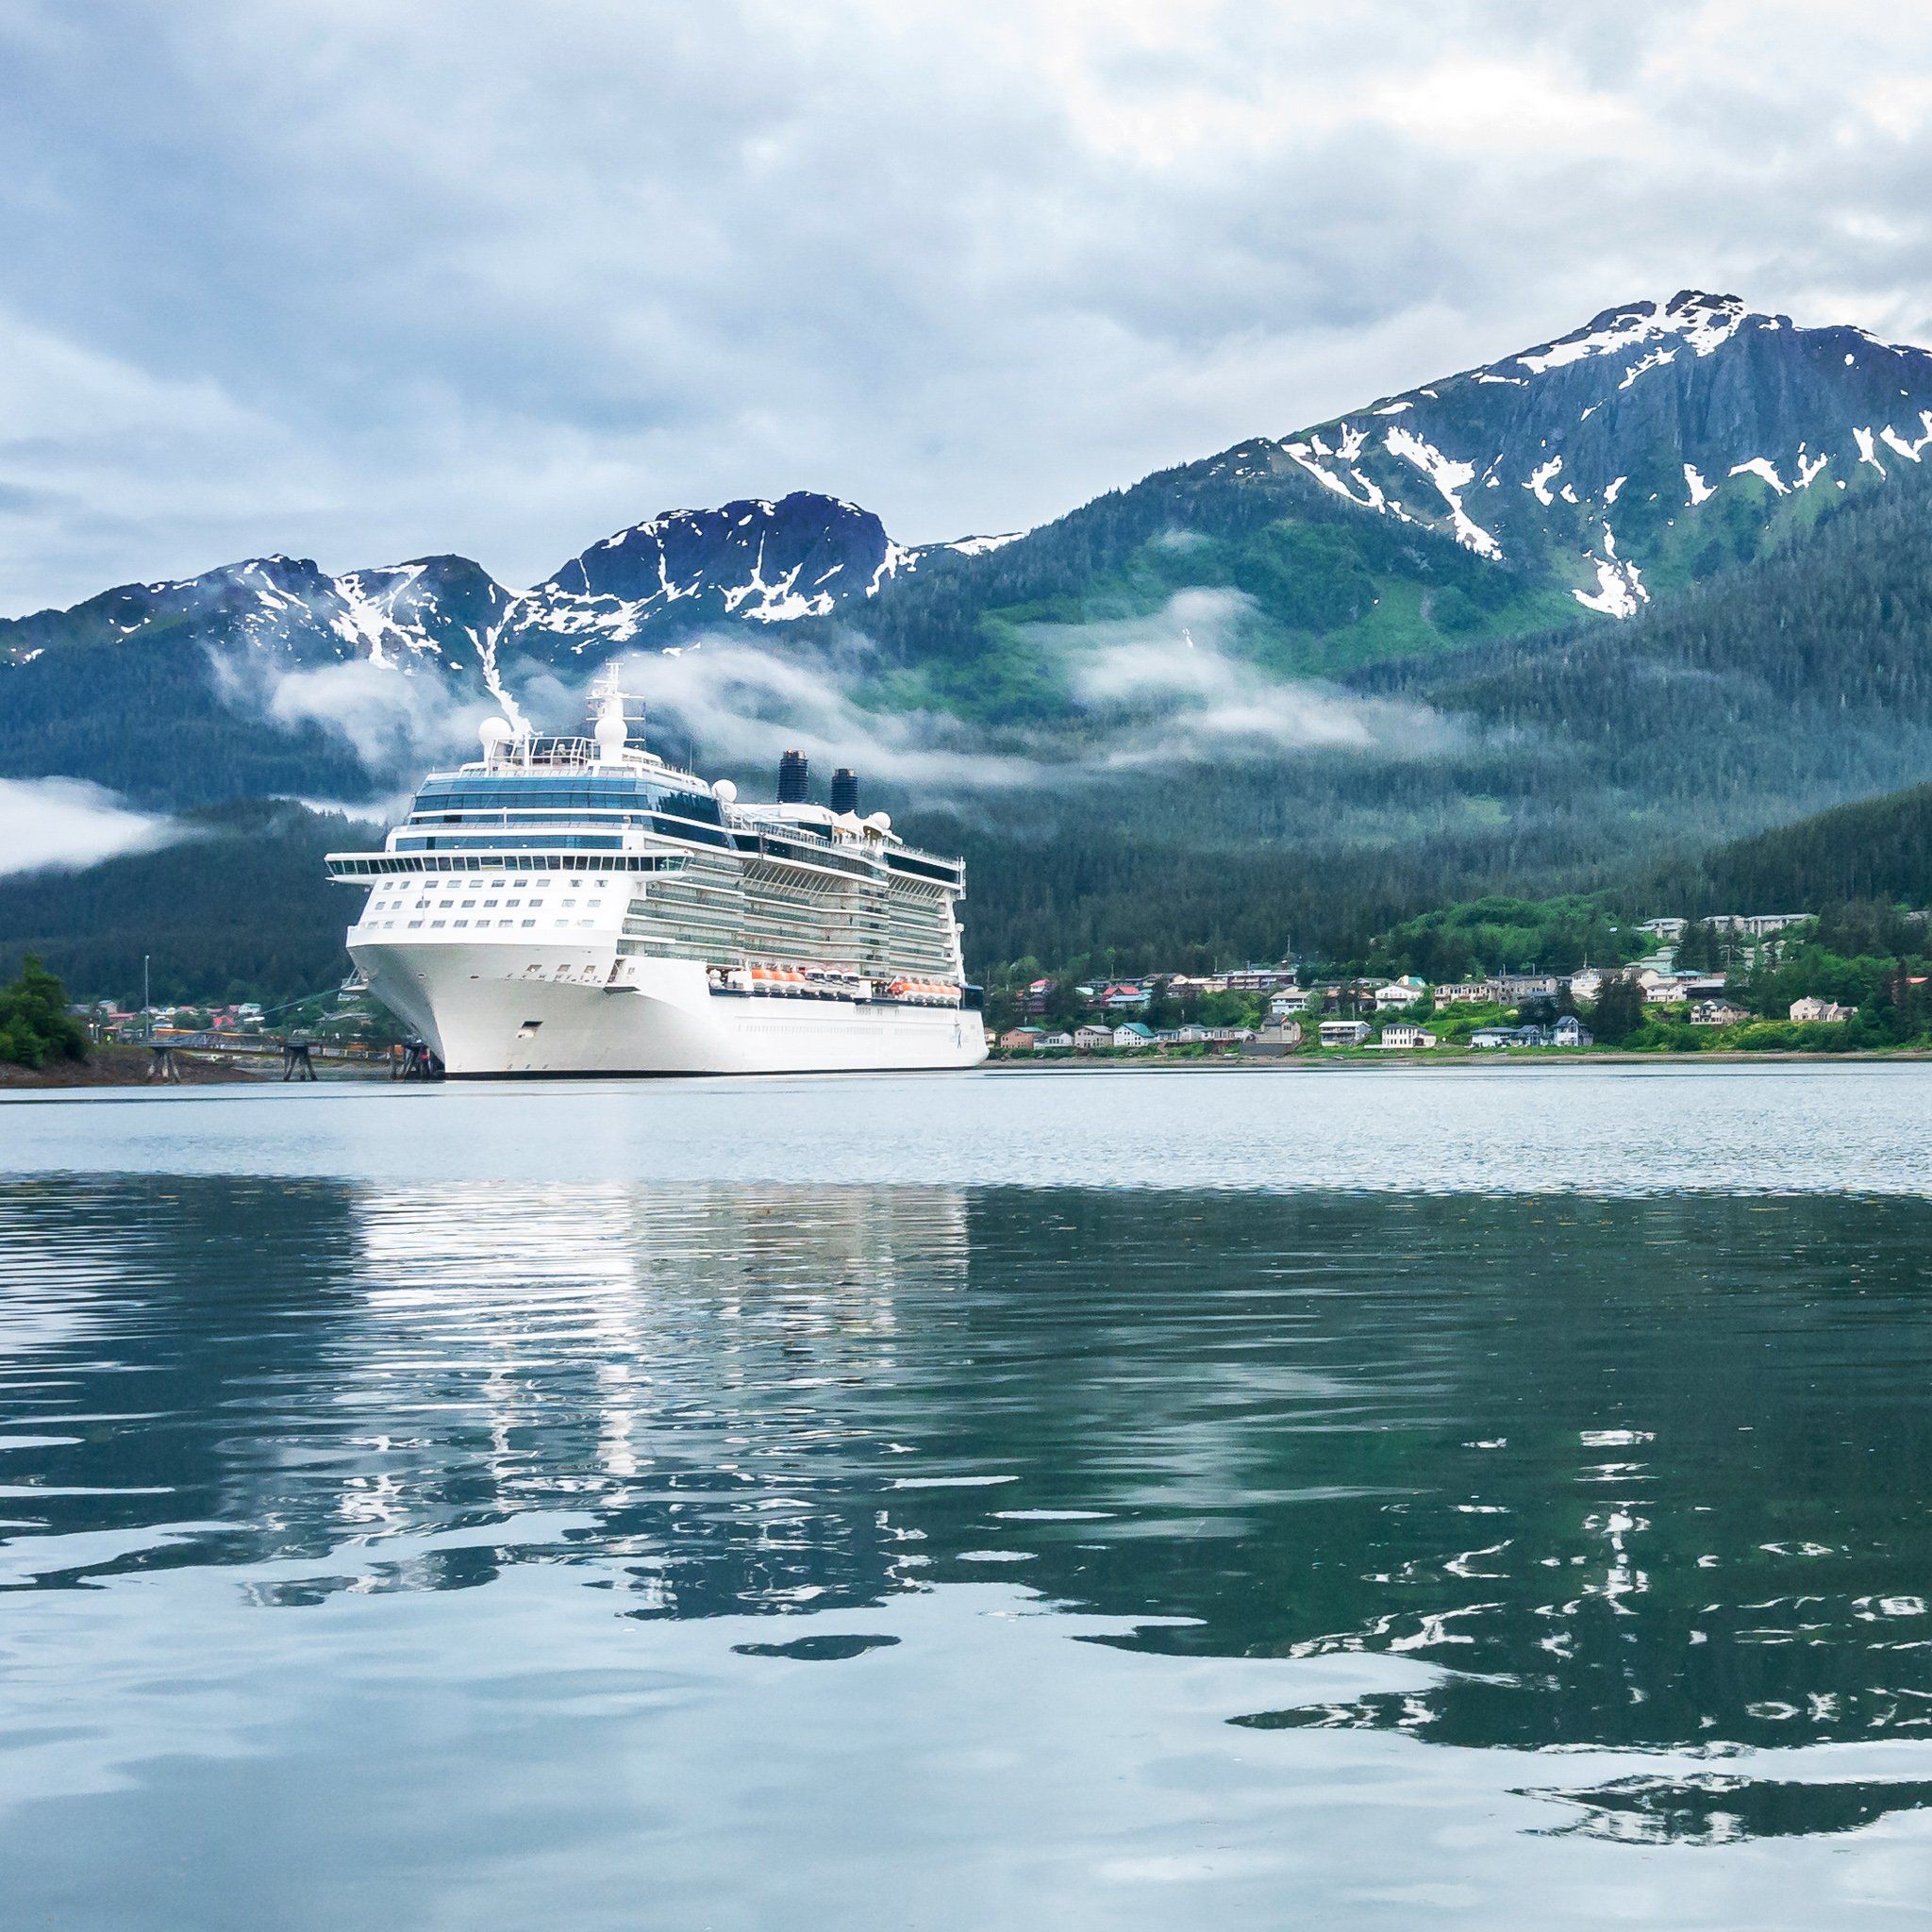 highendcustomdesign: Alaska Cruise Excursion Reviews